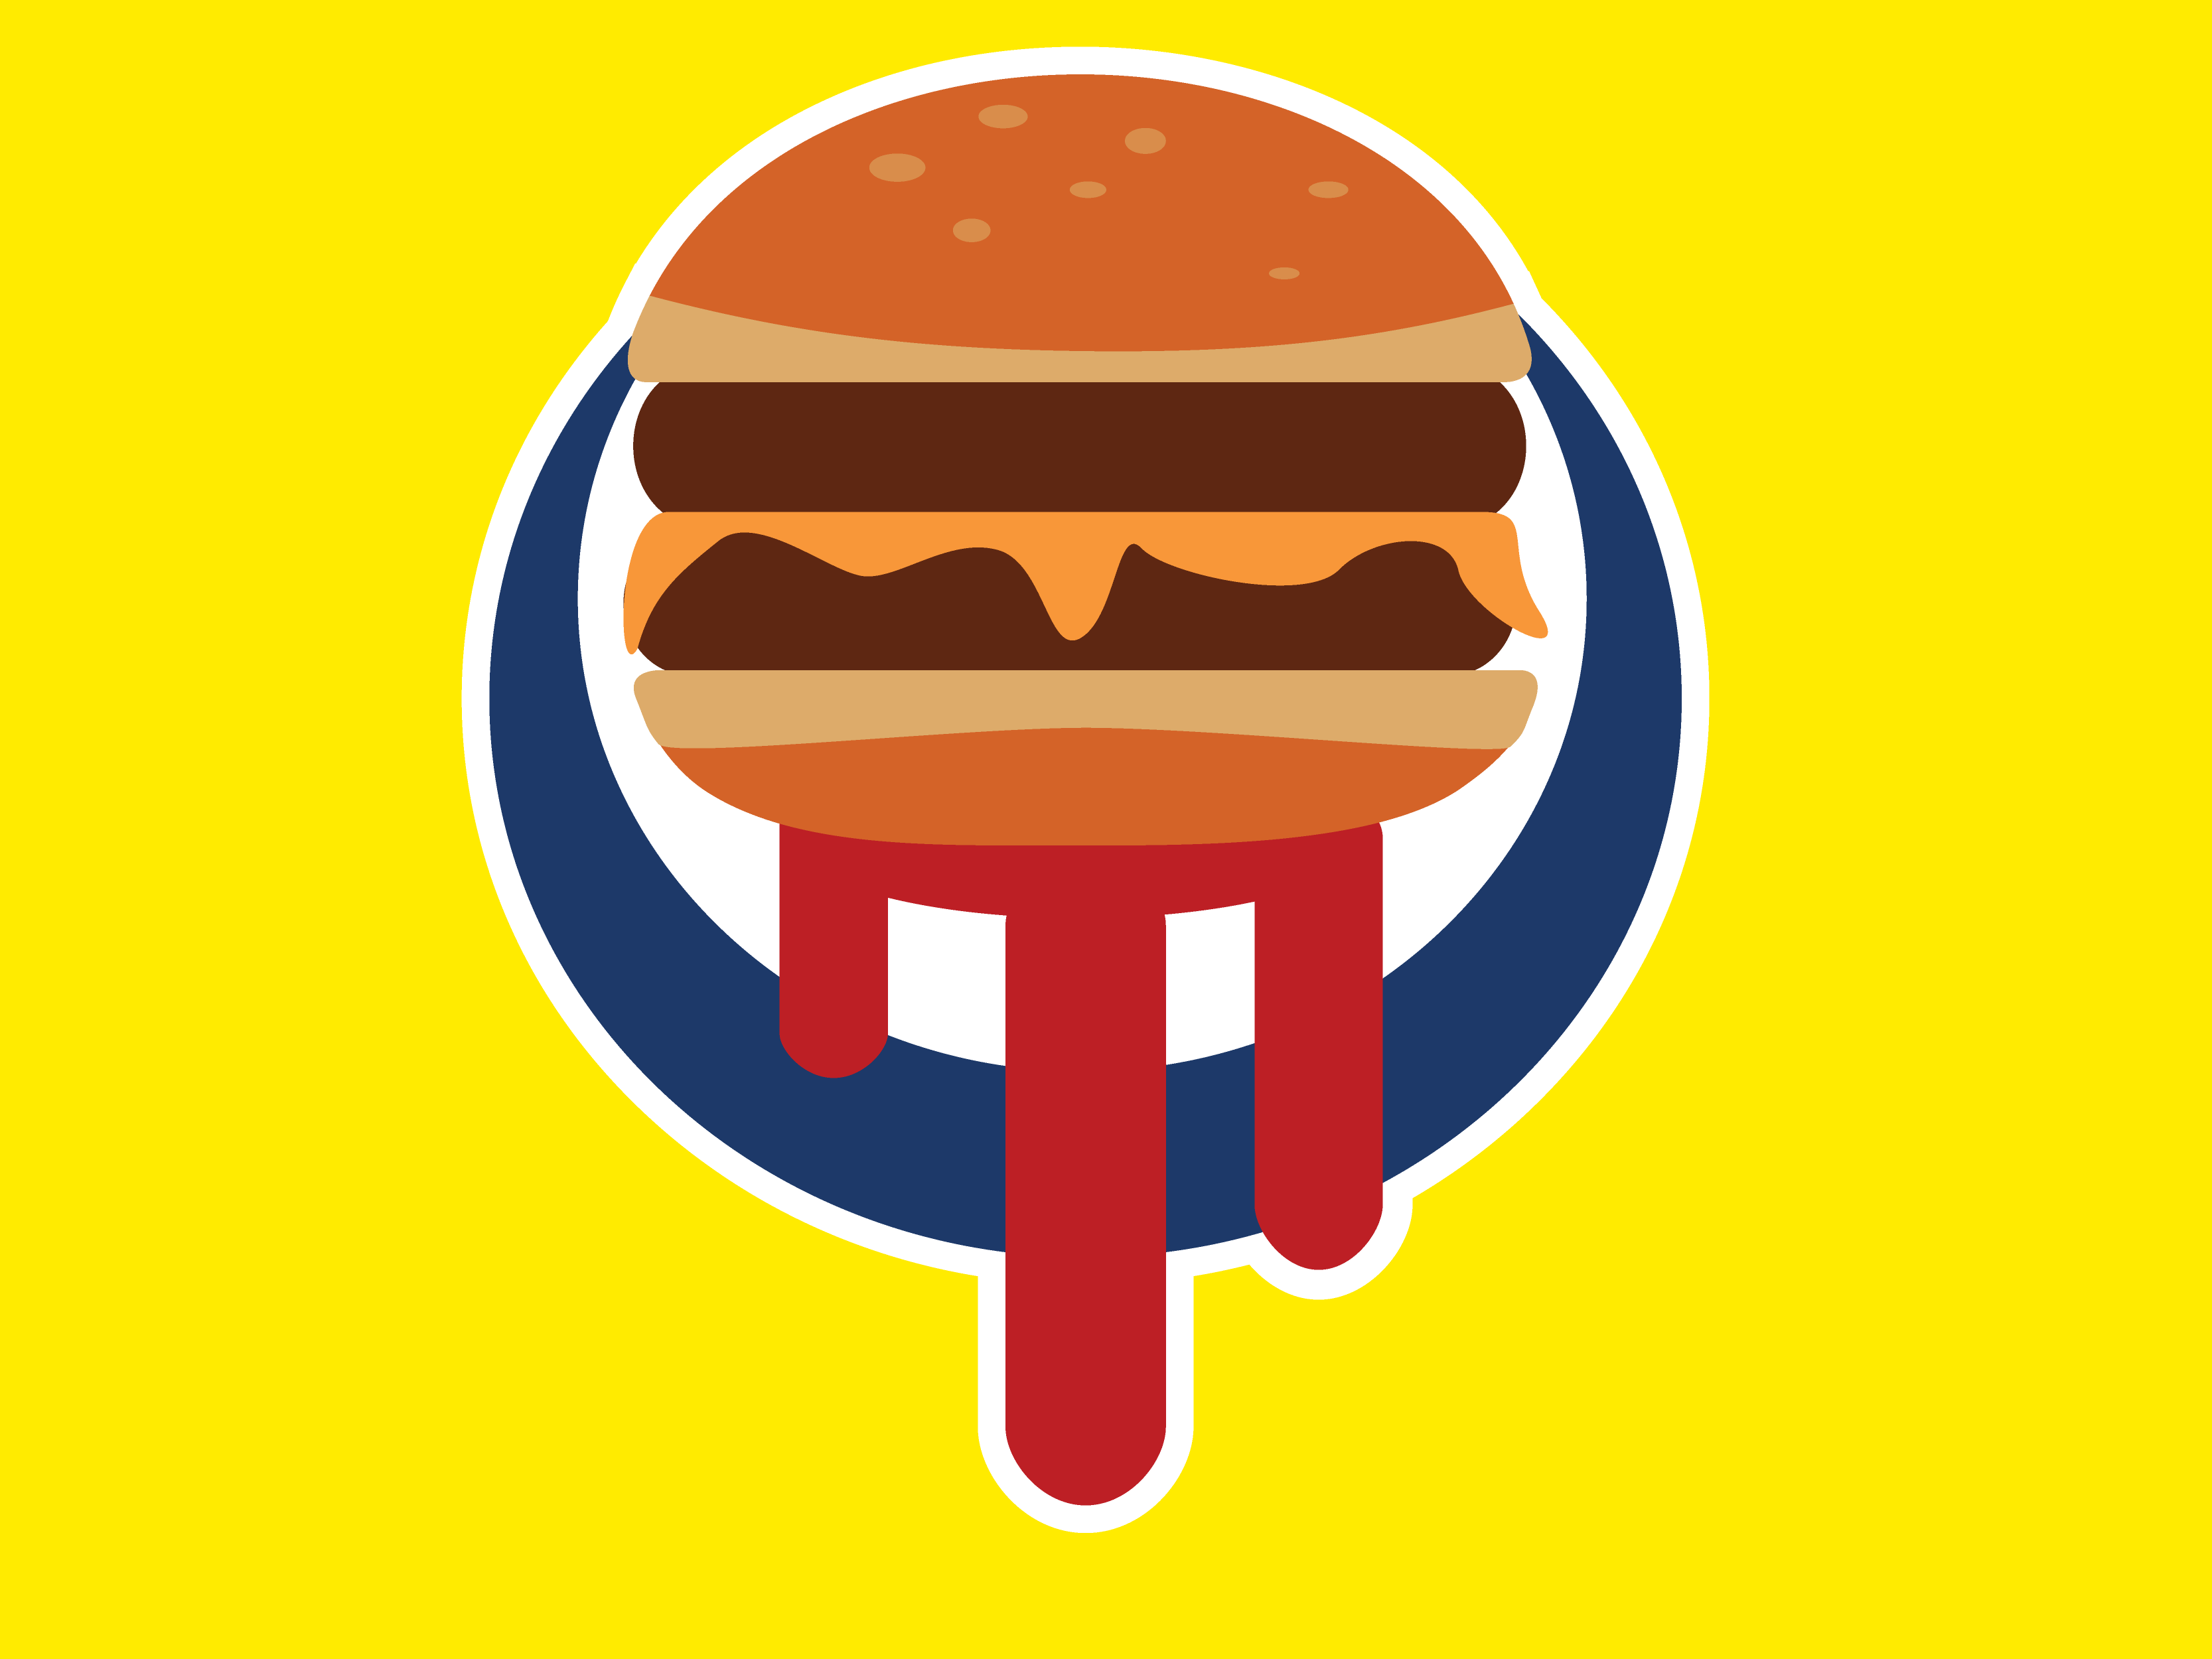 Burger Shot logo - GTA Series by MikeStofmeel on DeviantArt